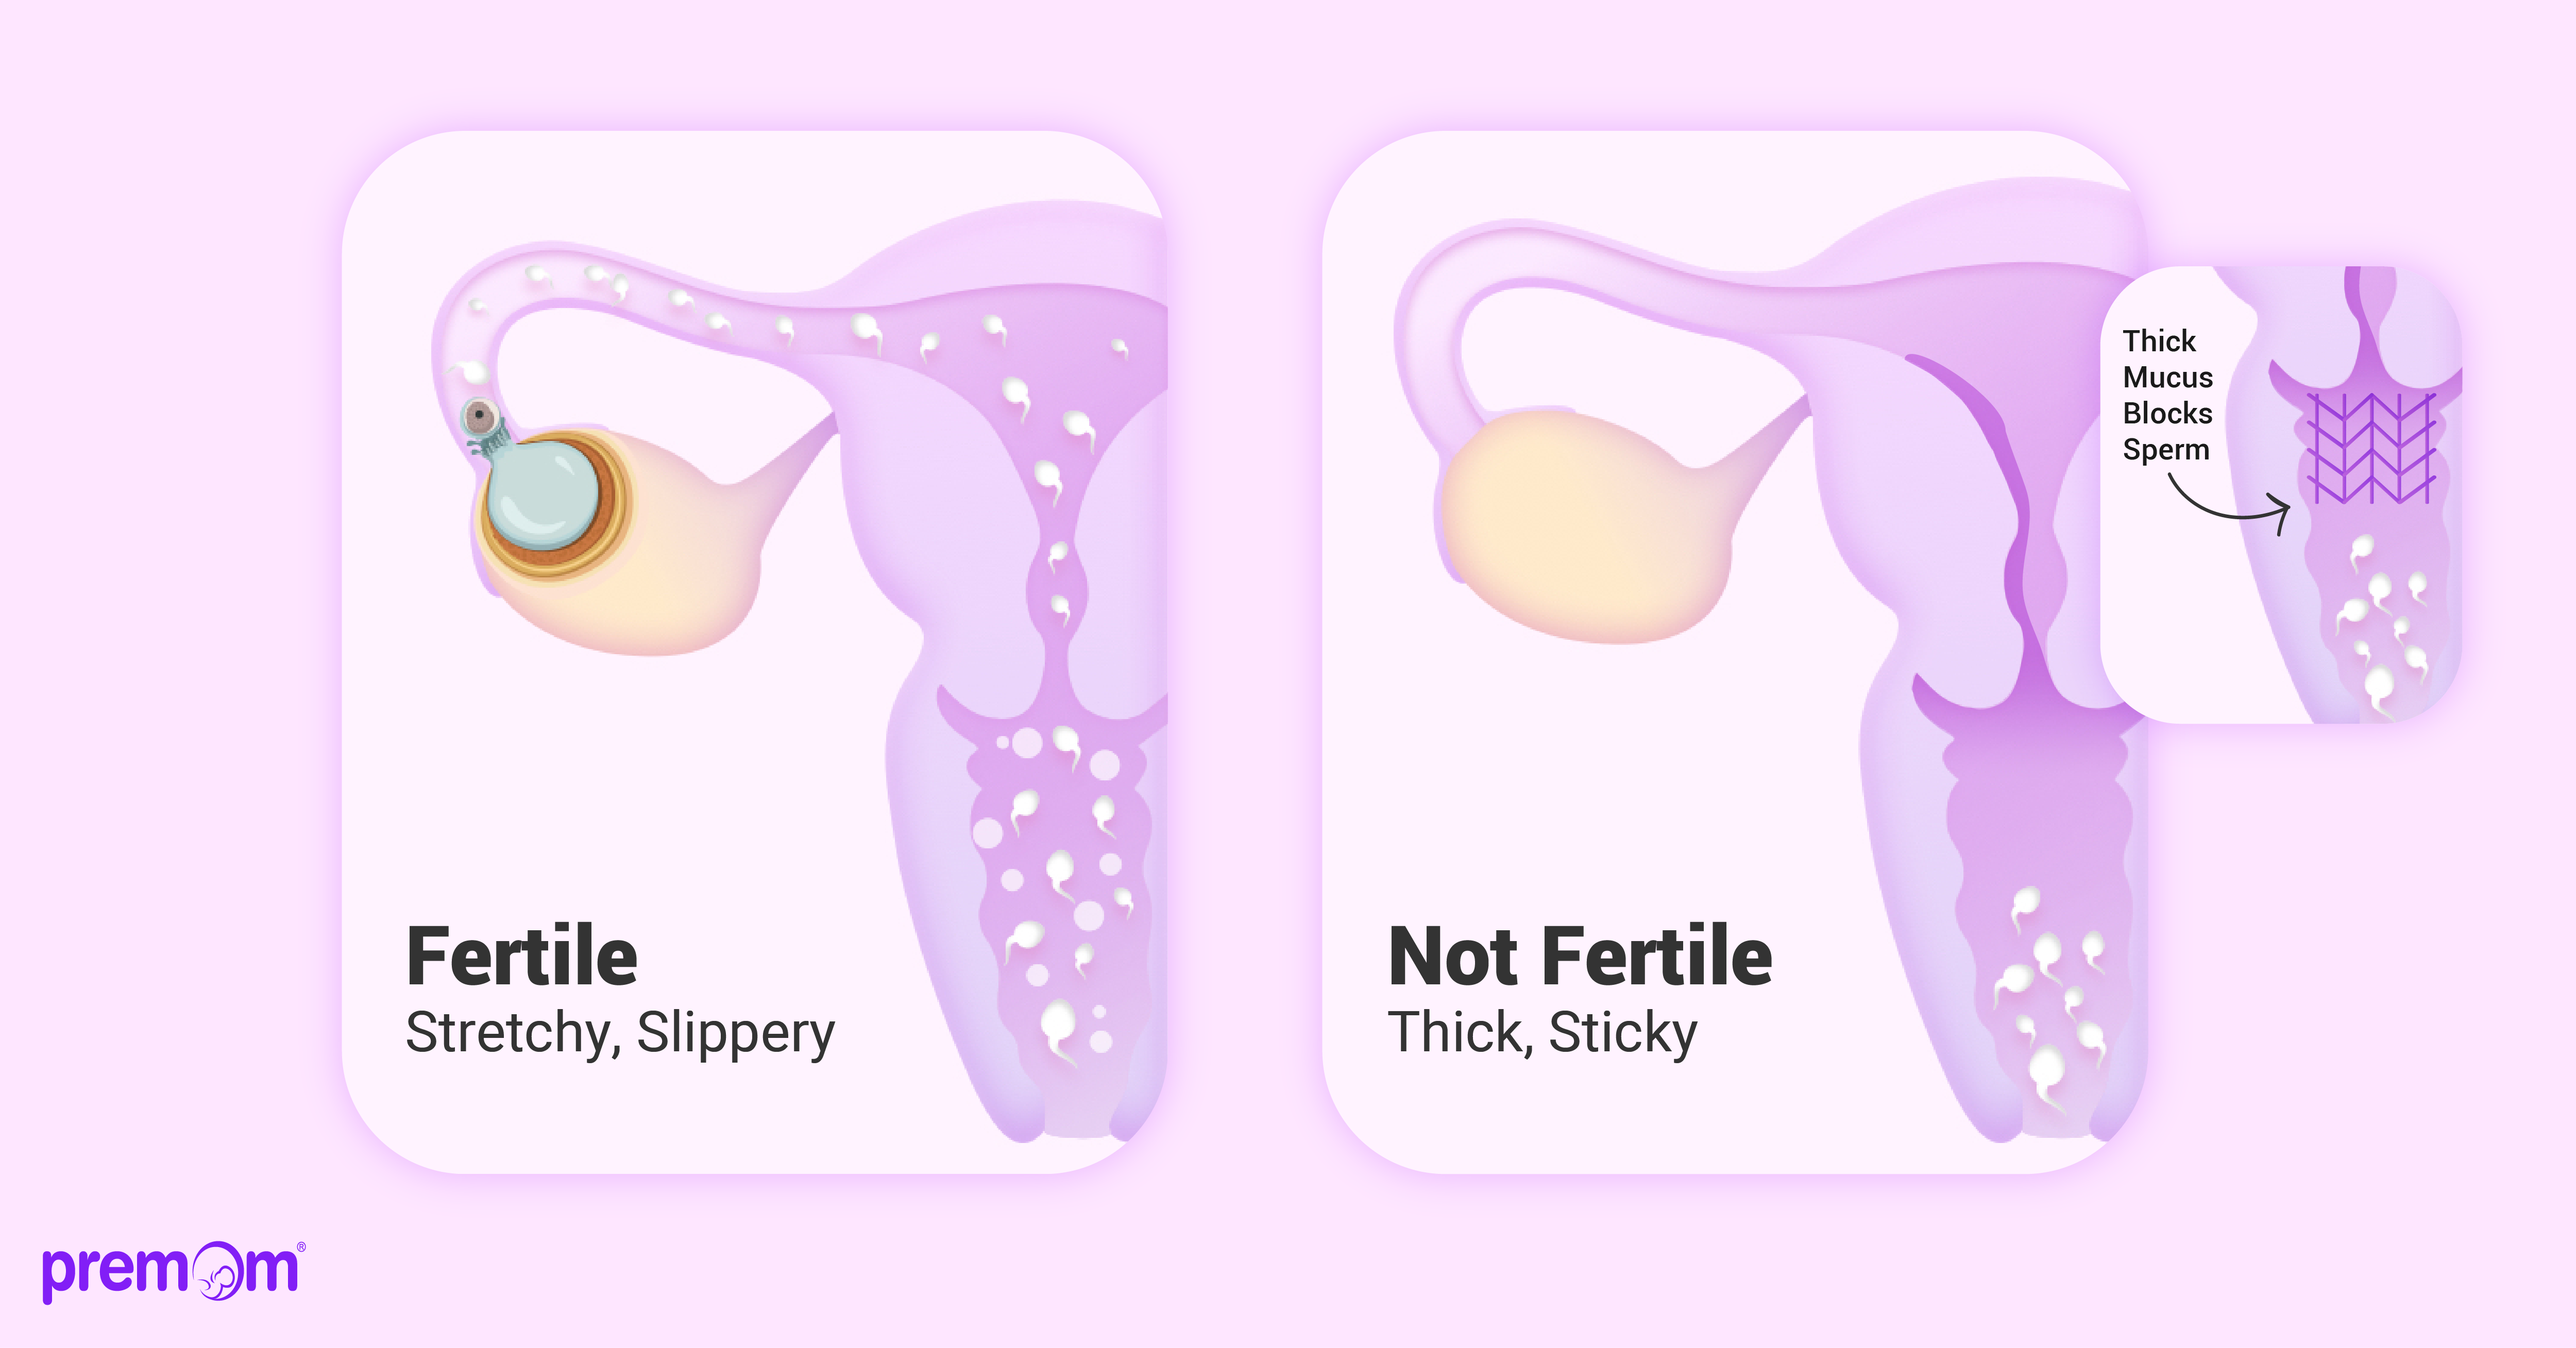 Fertile cervical mucus vs infertile